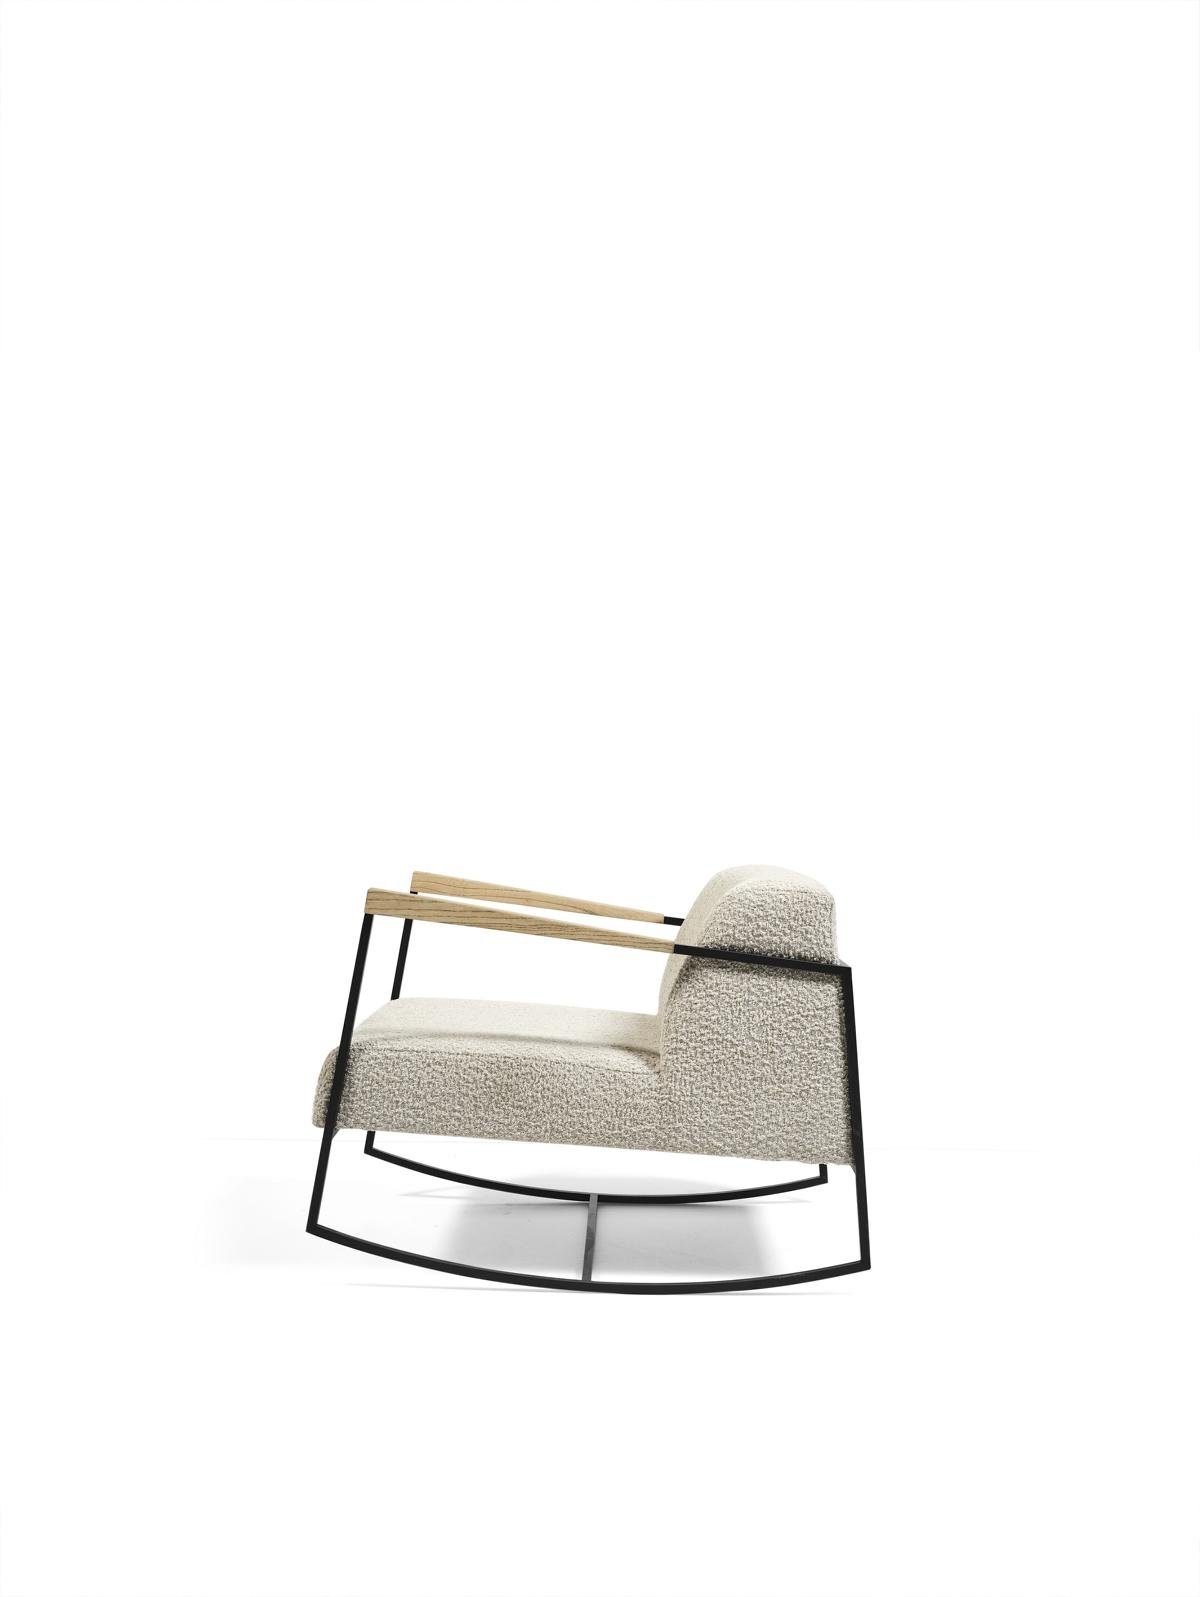 Textil Made Design 1 Sessel JVmoebel Neu Europe Sitzer Sitzer (Sessel), Luxus Sessel Polster in